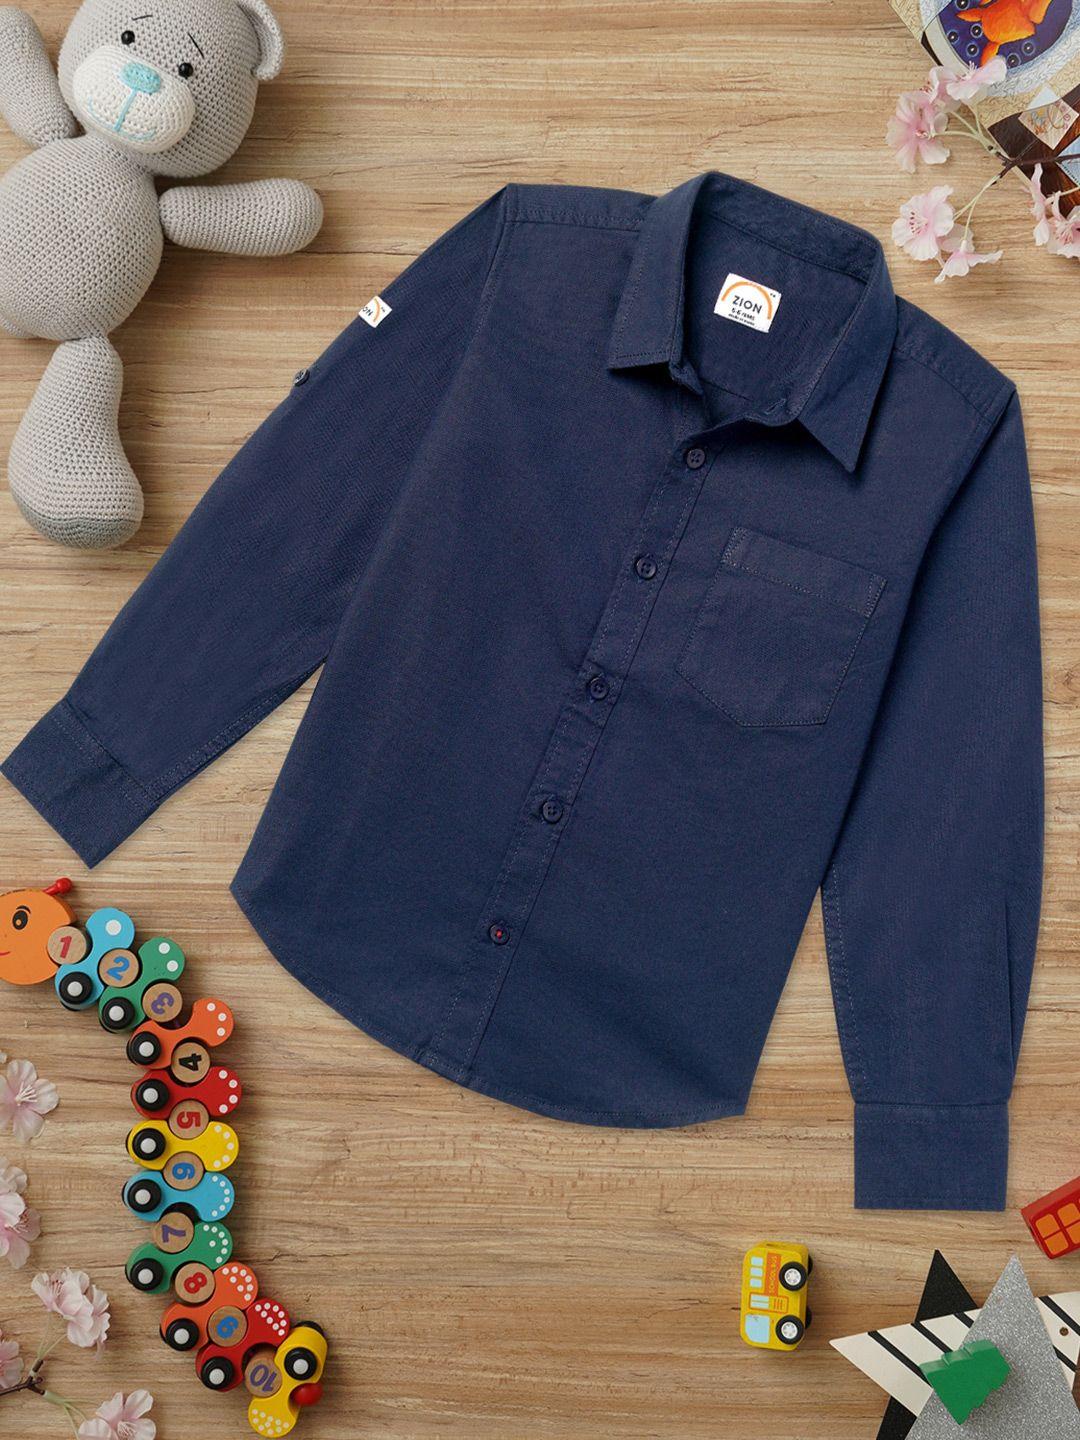 zion-kids-boys-cotton-solid-comfort-casual-shirt